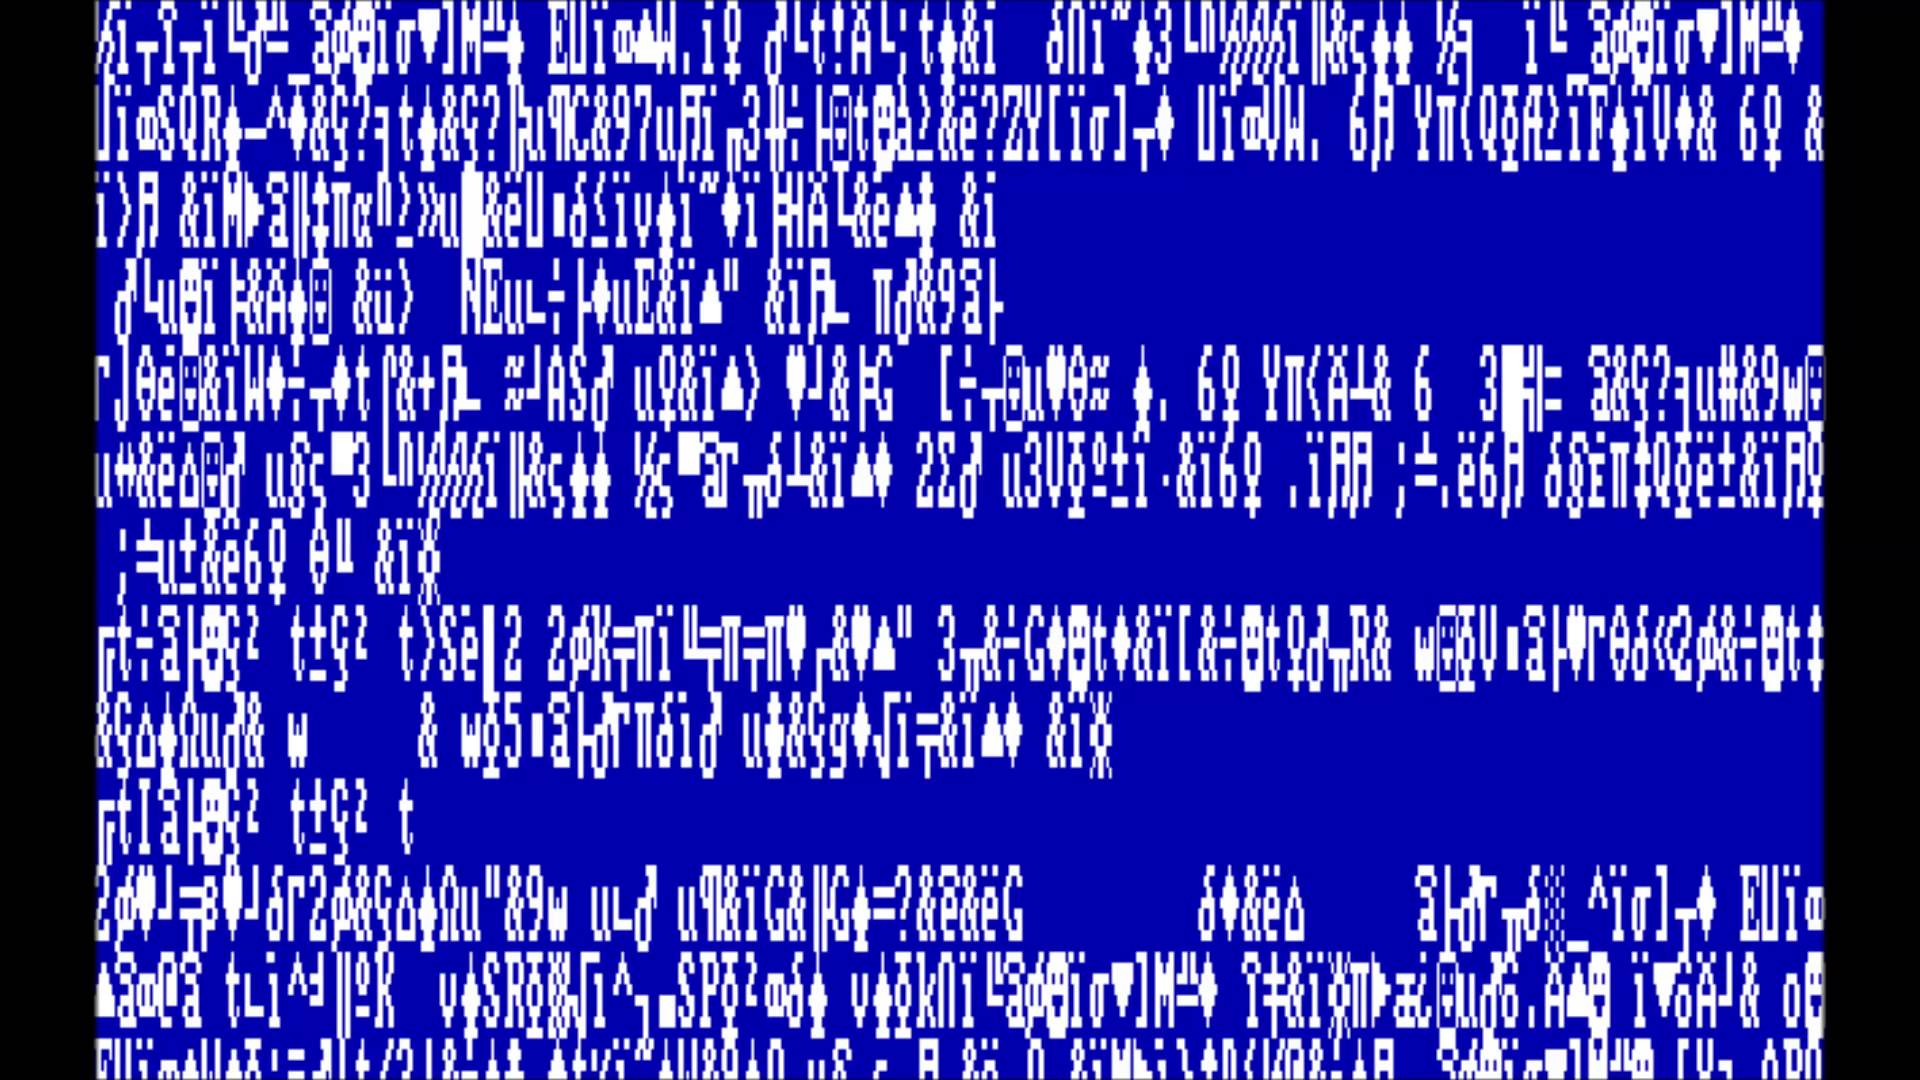 Windows 1 - 0 Bsod - Windows 1 Blue Screen - HD Wallpaper 